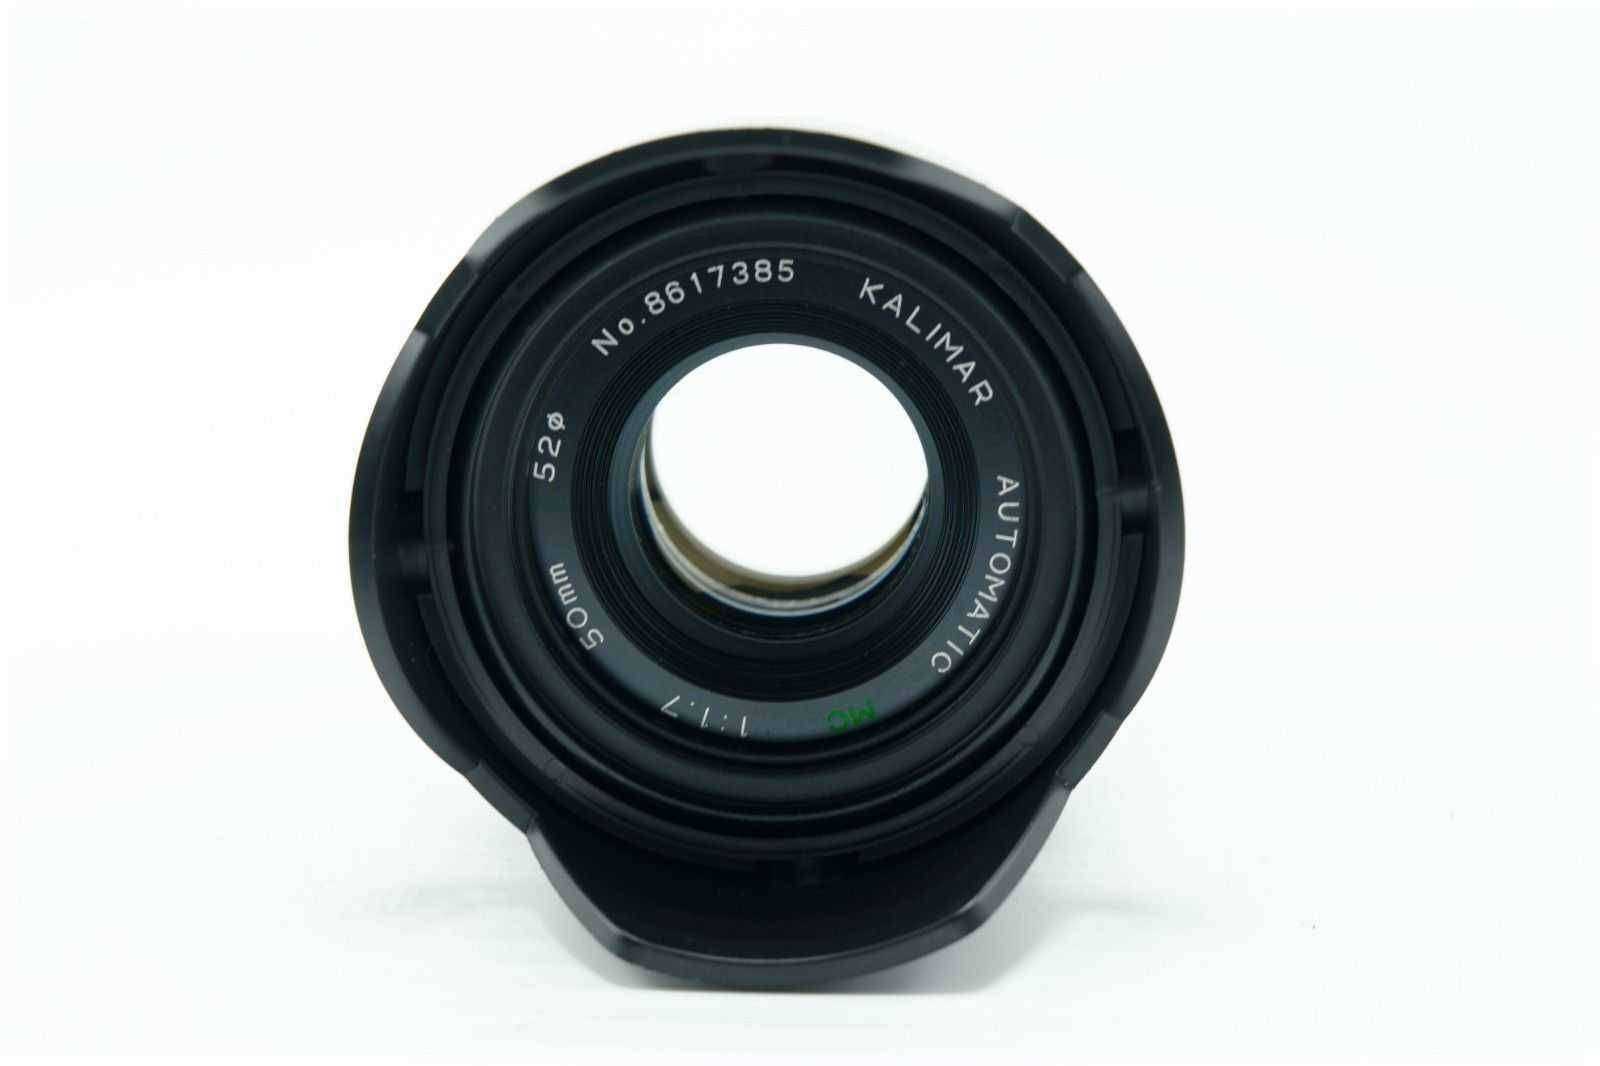 Review: Kalimar 50mm f1.7 Lens (Canon FD-Mount)